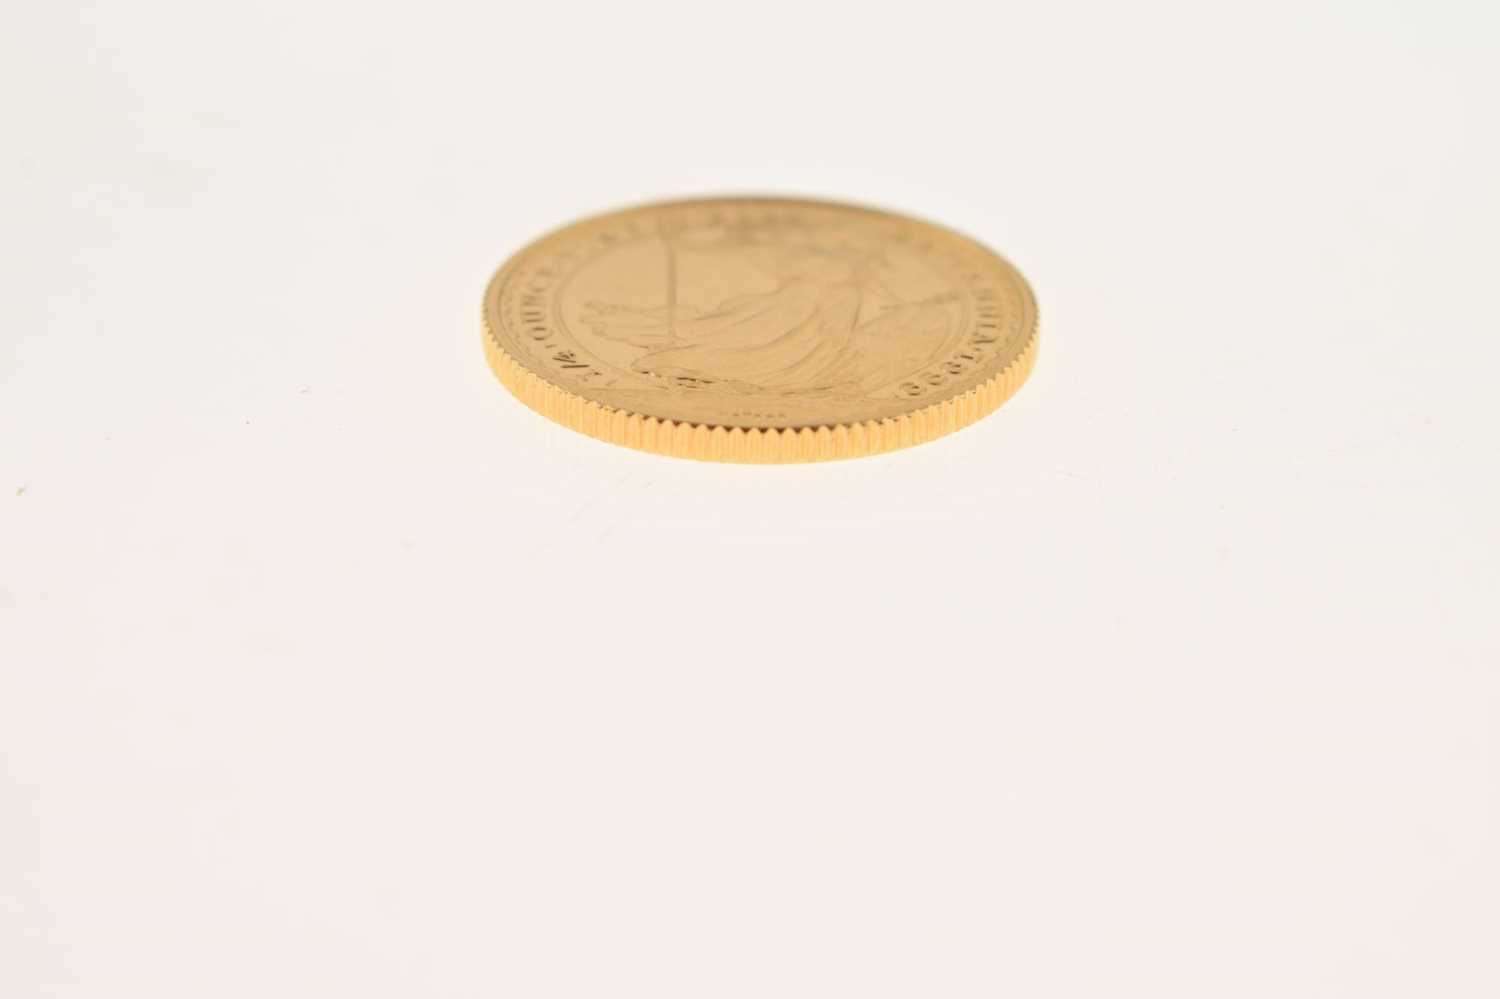 1/4oz Twenty-Five Pound Fine Gold Britannia Coin, 1999 - Image 2 of 5